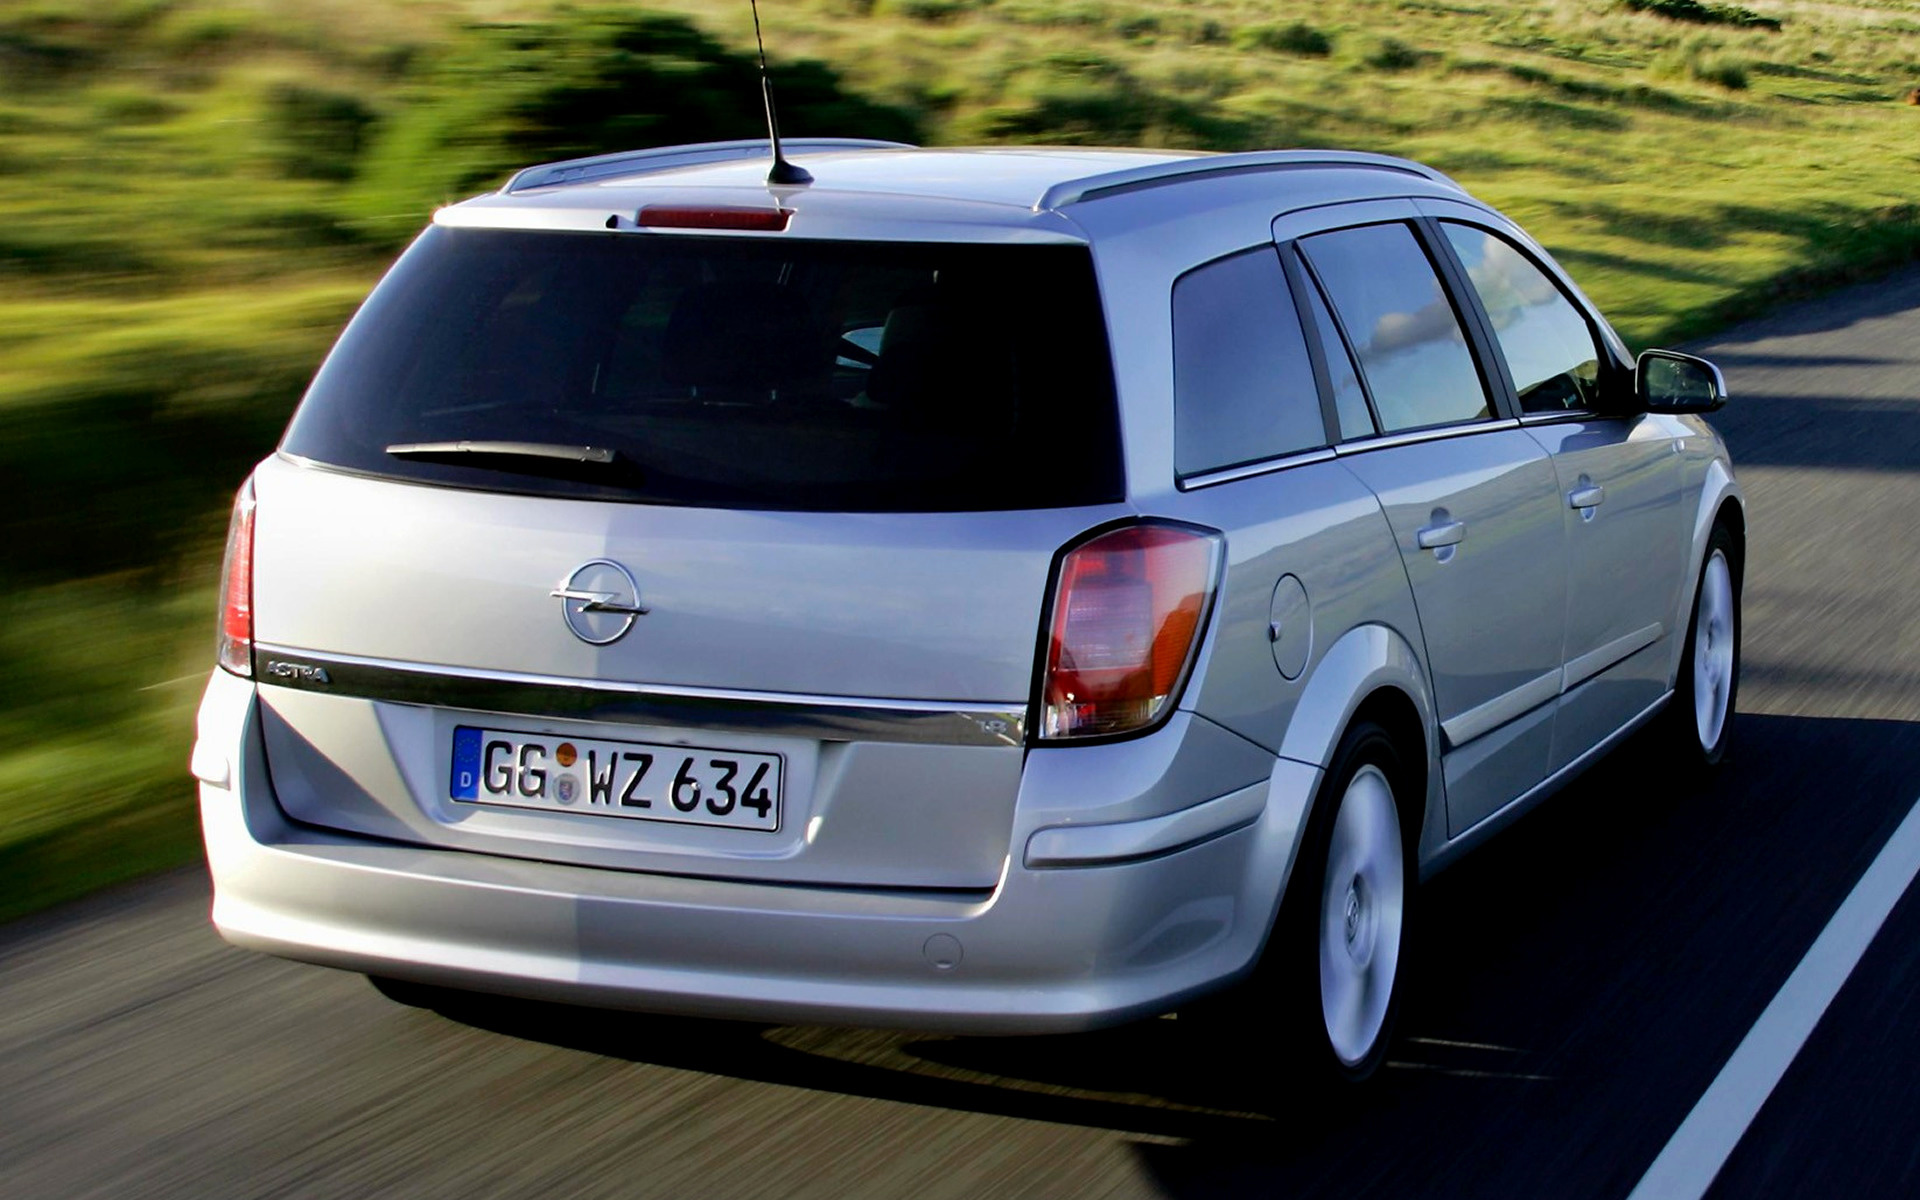 Джи караван. Opel Astra Caravan (h) 2004. Opel Astra Caravan 2008. Opel Astra 2004 универсал. Opel Astra Caravan 2006.